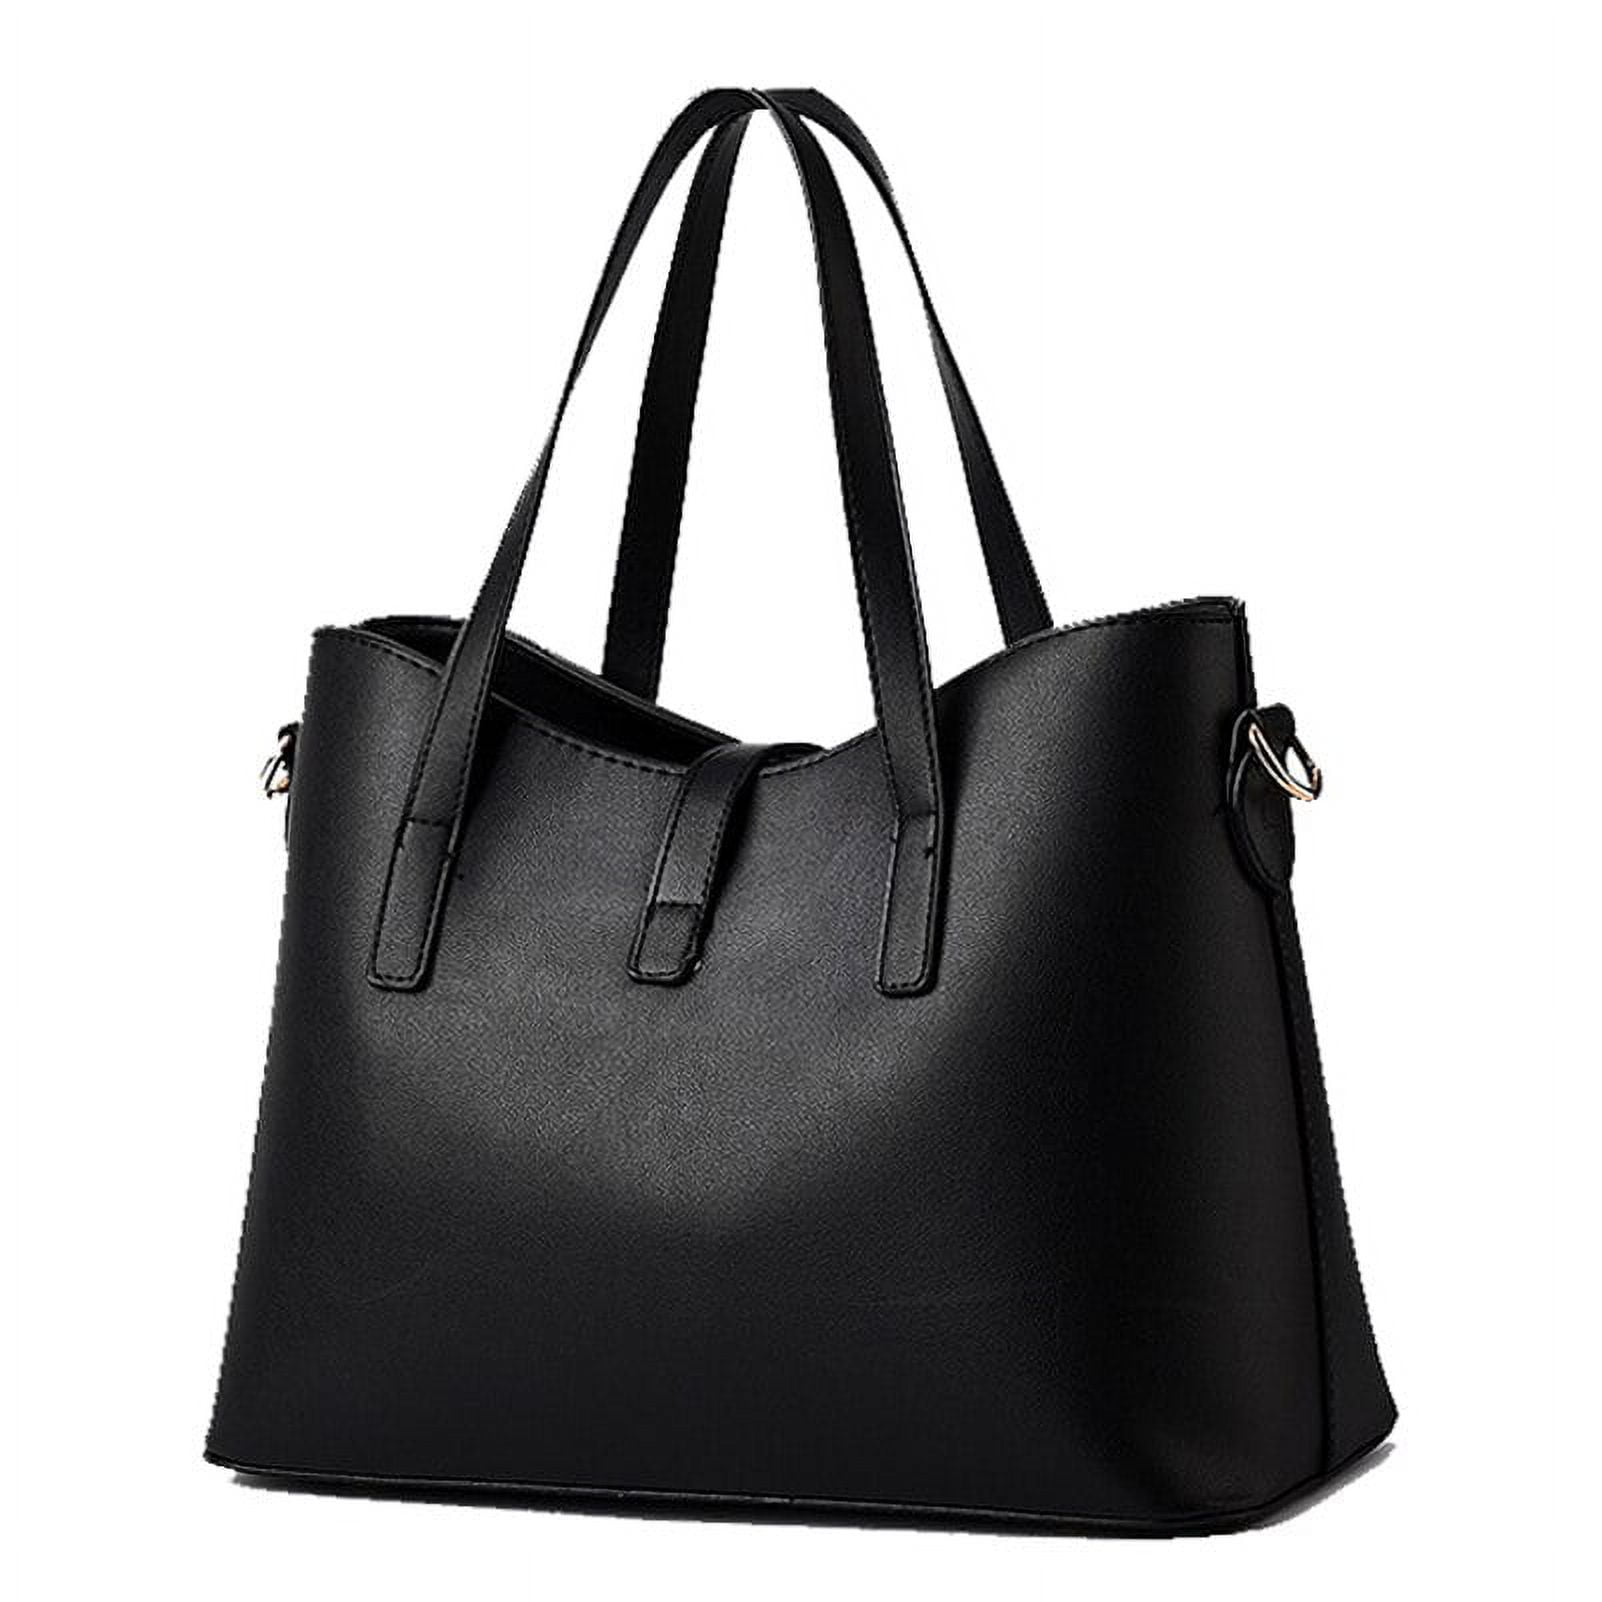 Formal Style Business Female Shoulder Handbag Purse Bags - Black by NancyBrandy